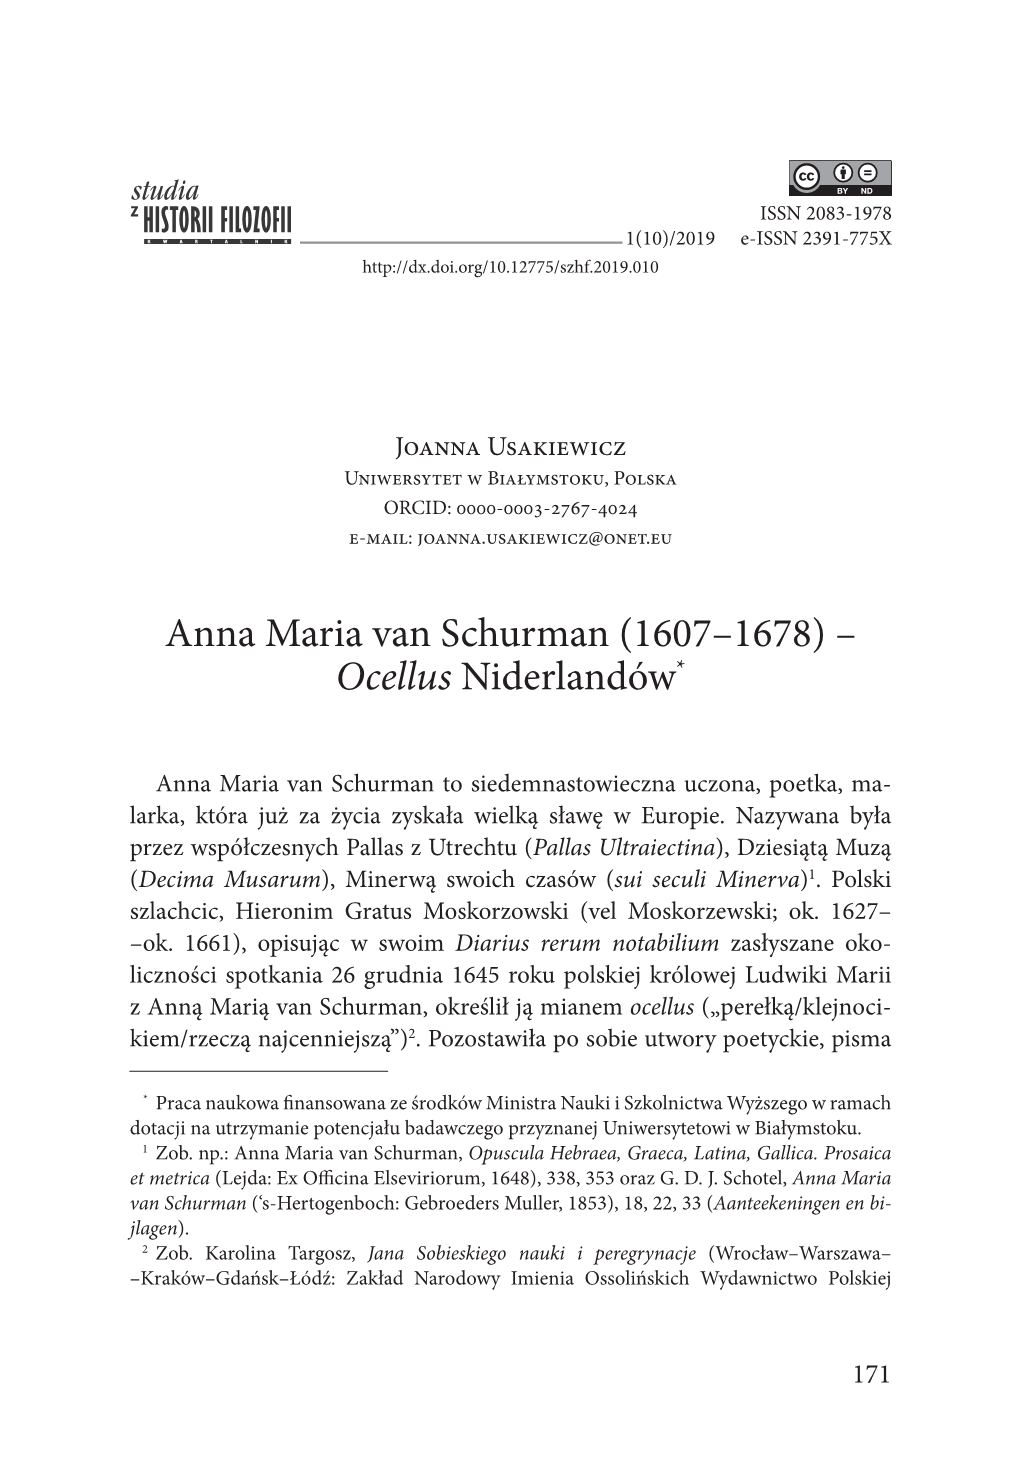 Anna Maria Van Schurman (1607–1678) – Ocellus Niderlandów*